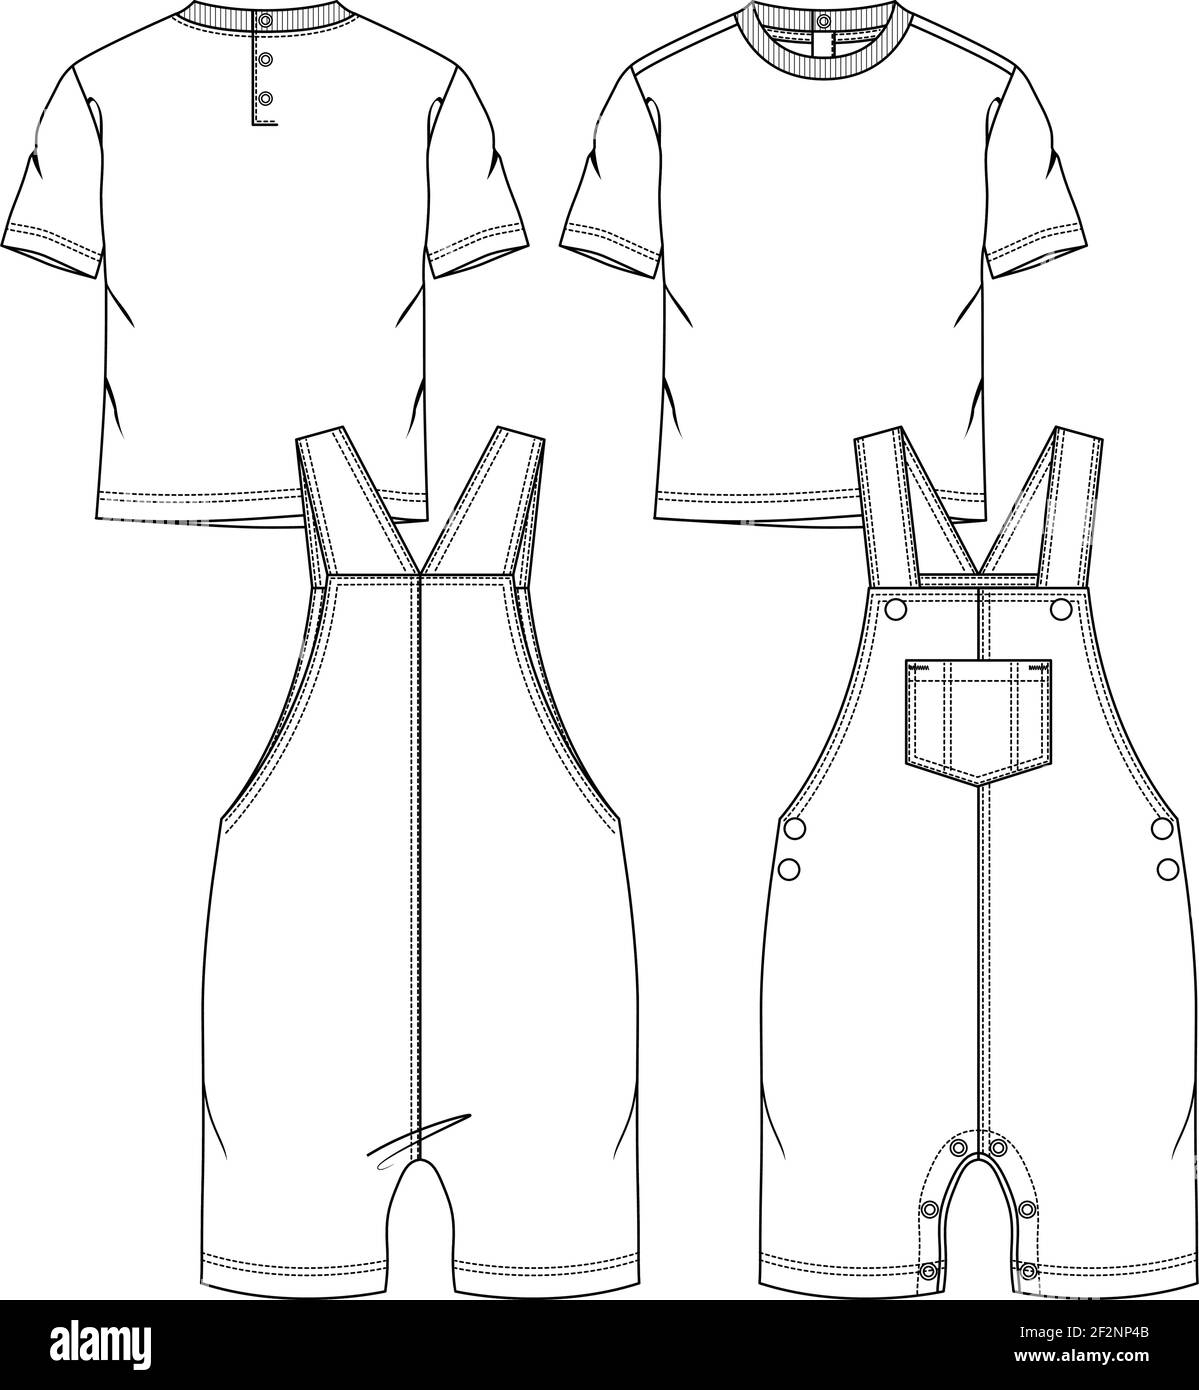 Chiffon Dropped Waist Dress Technical Drawing by ThaisBortto on DeviantArt